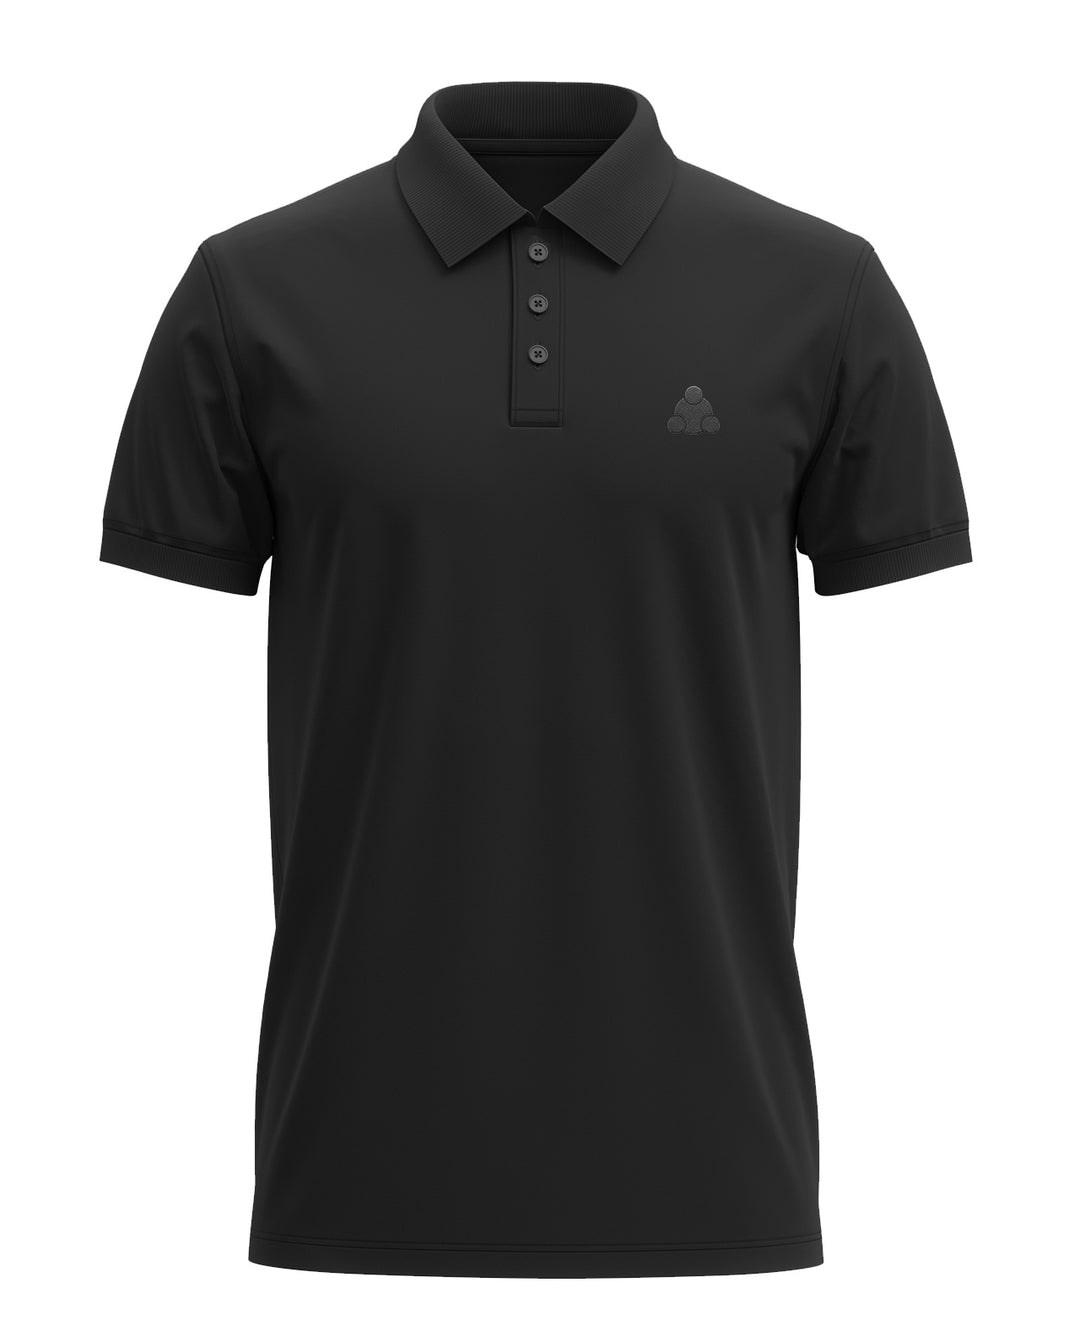 Trinizen Basics Polo T-shirt Embroidered Logo - Black